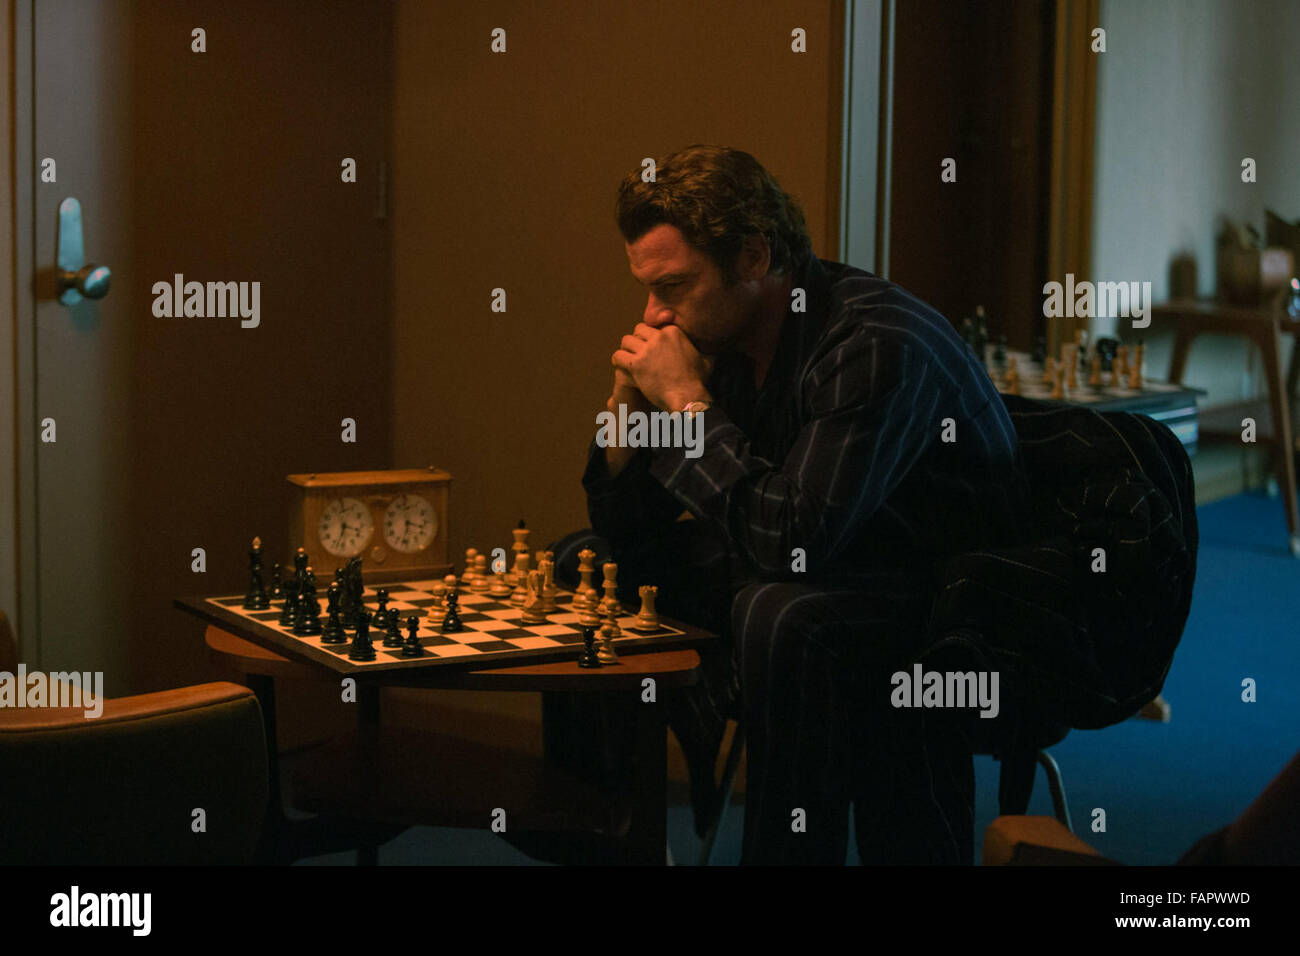 Europe Premiere pawn Sacrifice Berlin Boris Spassky chess legend